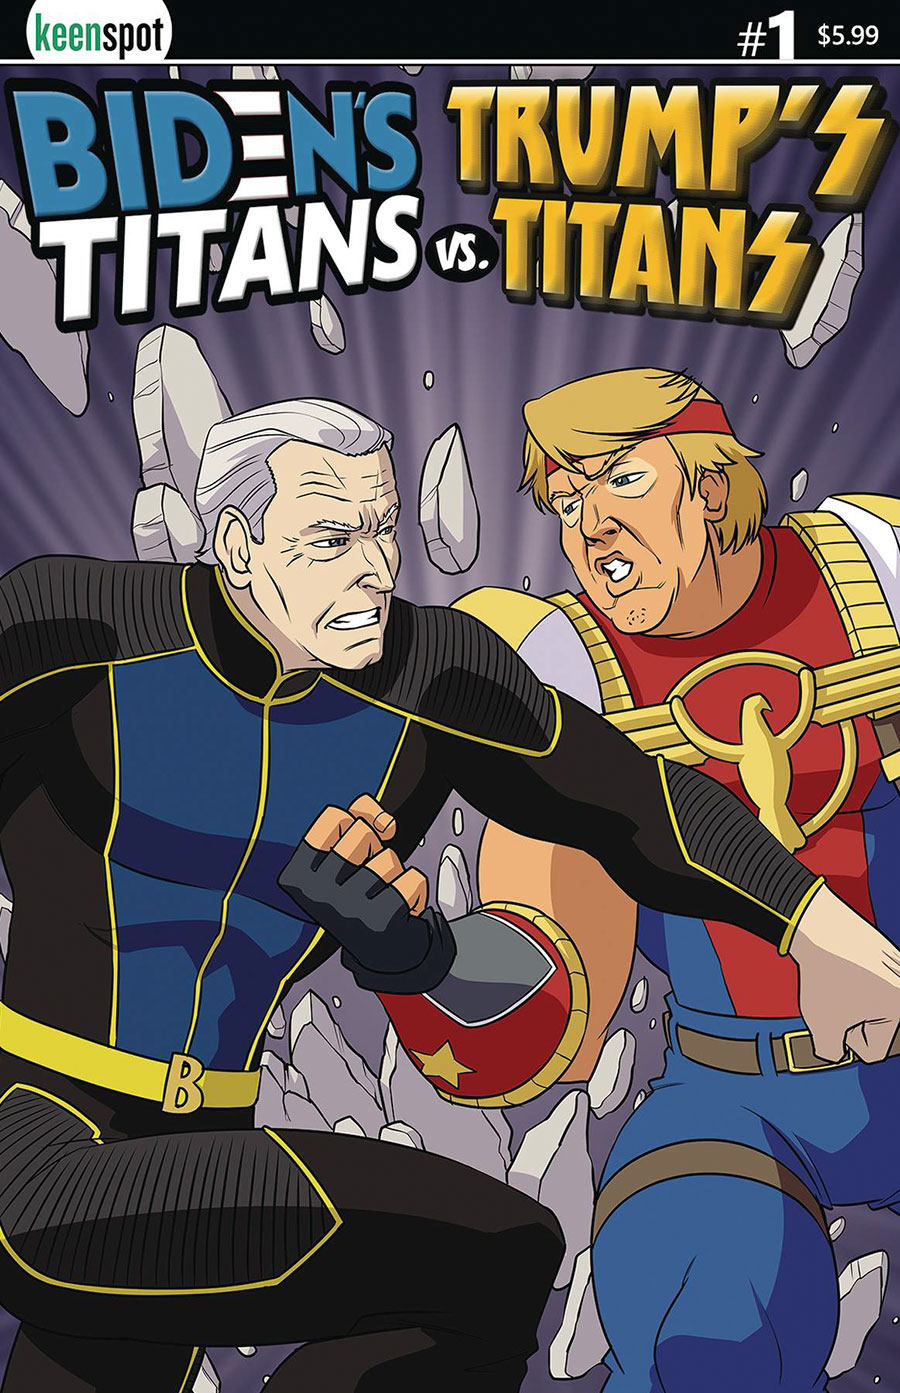 Bidens Titans vs Trumps Titans #1 (One Shot) Cover B Variant Joe vs Donald Cover